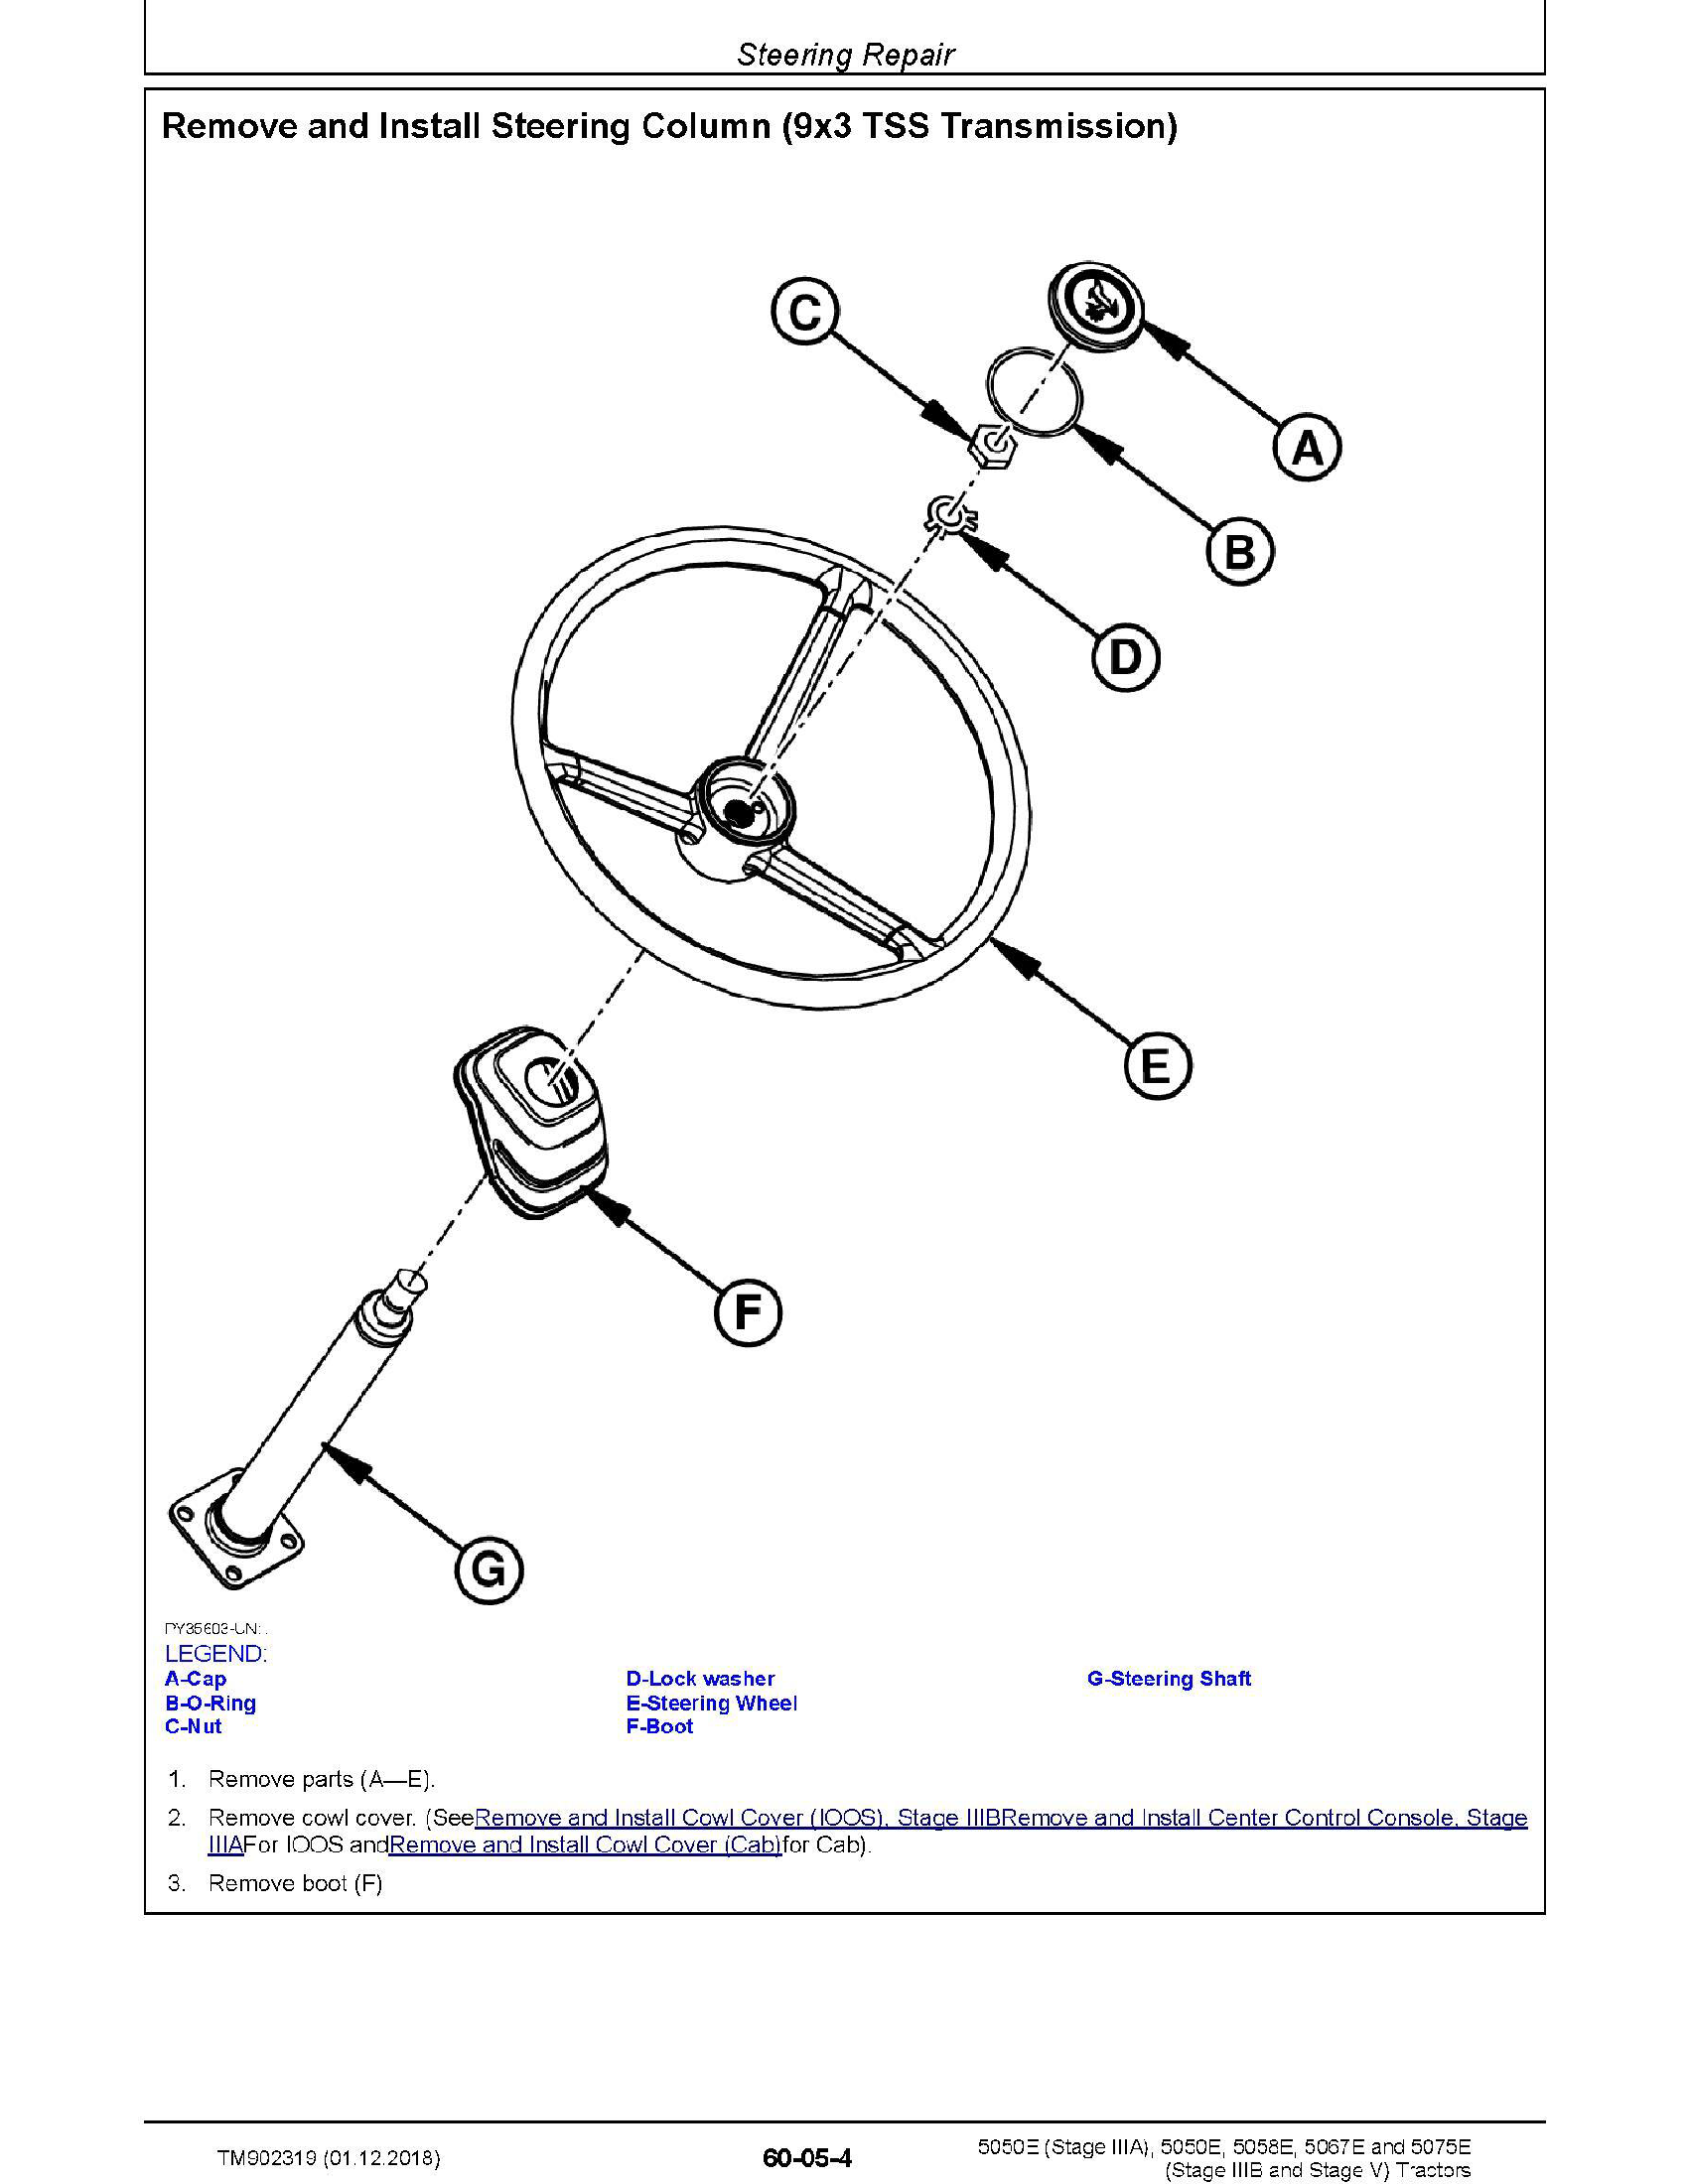 John Deere 9780CTS manual pdf